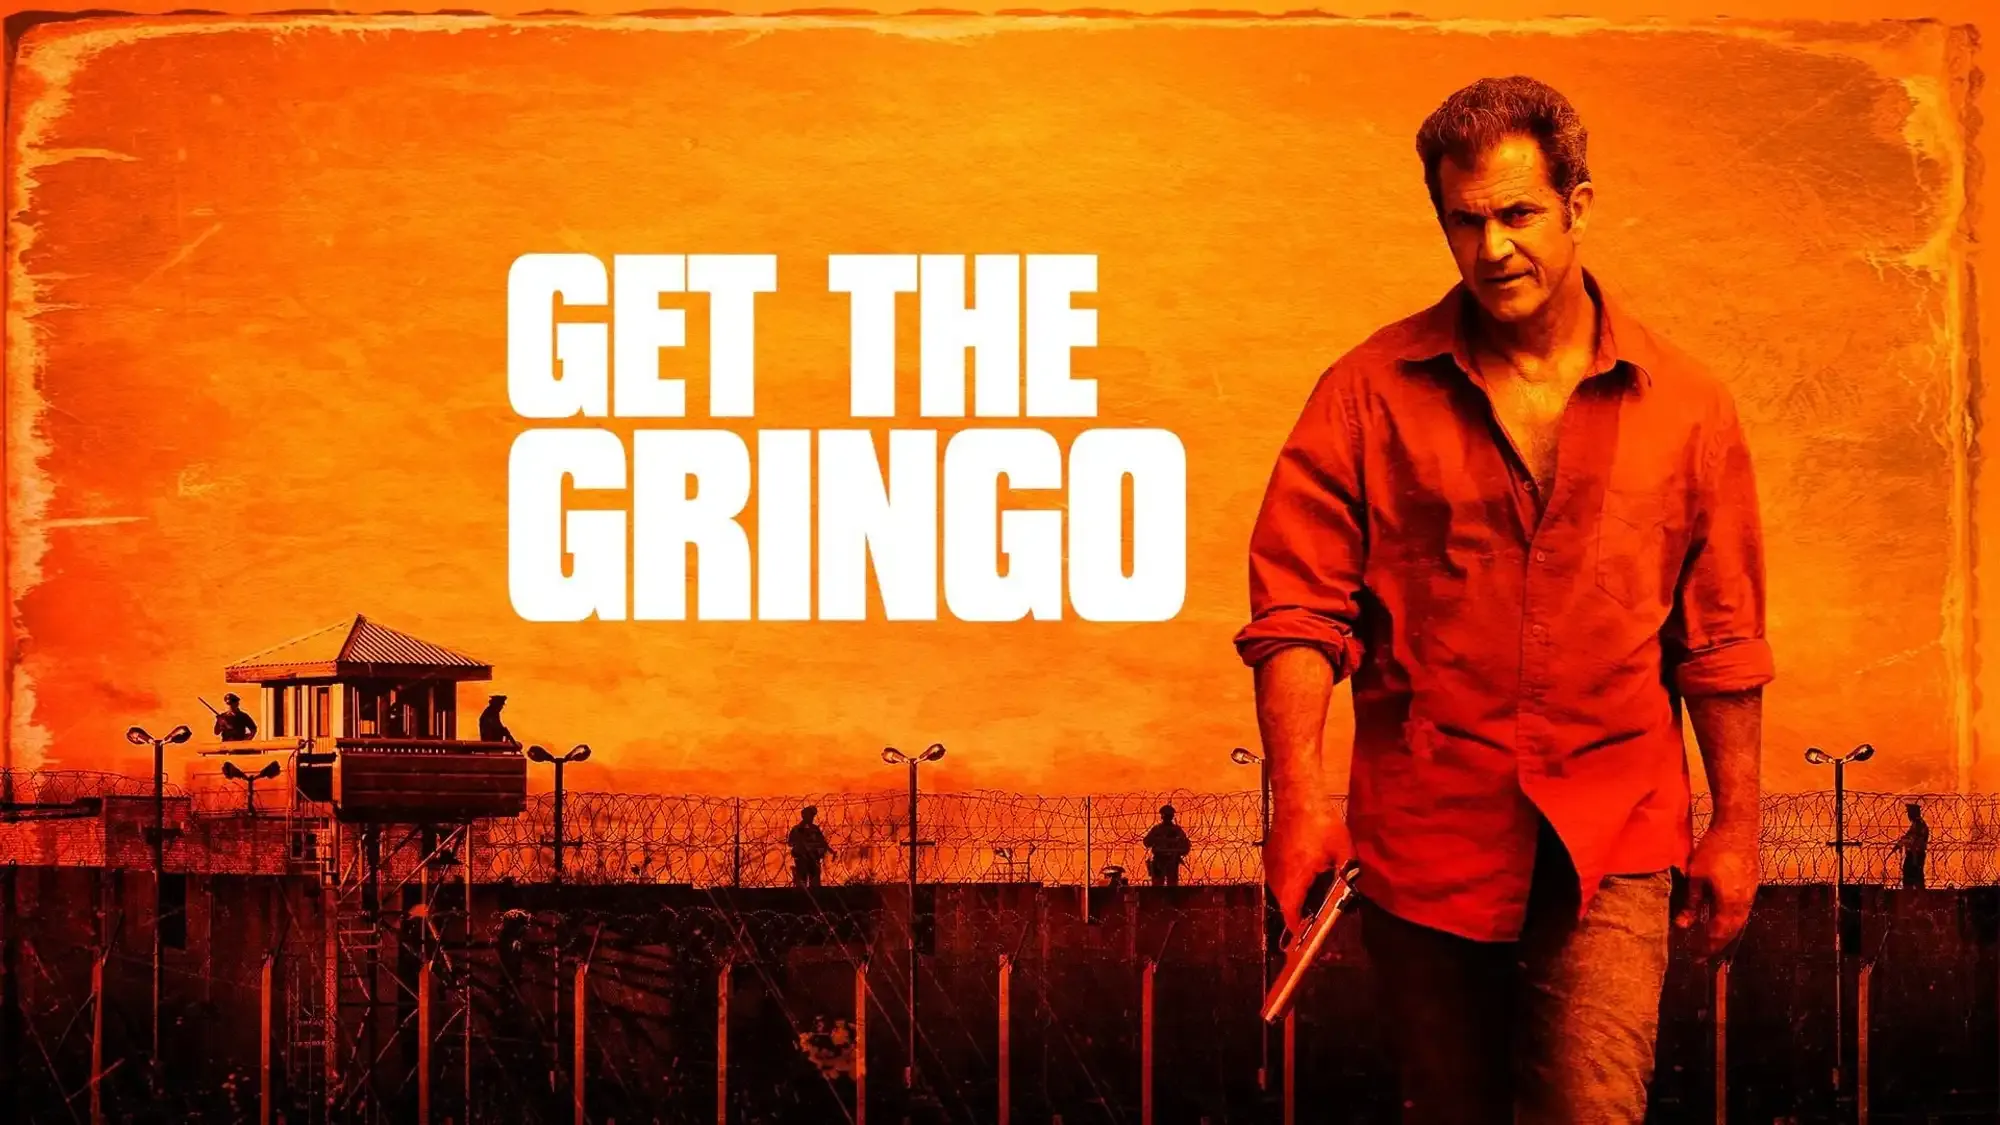 Get the Gringo movie review